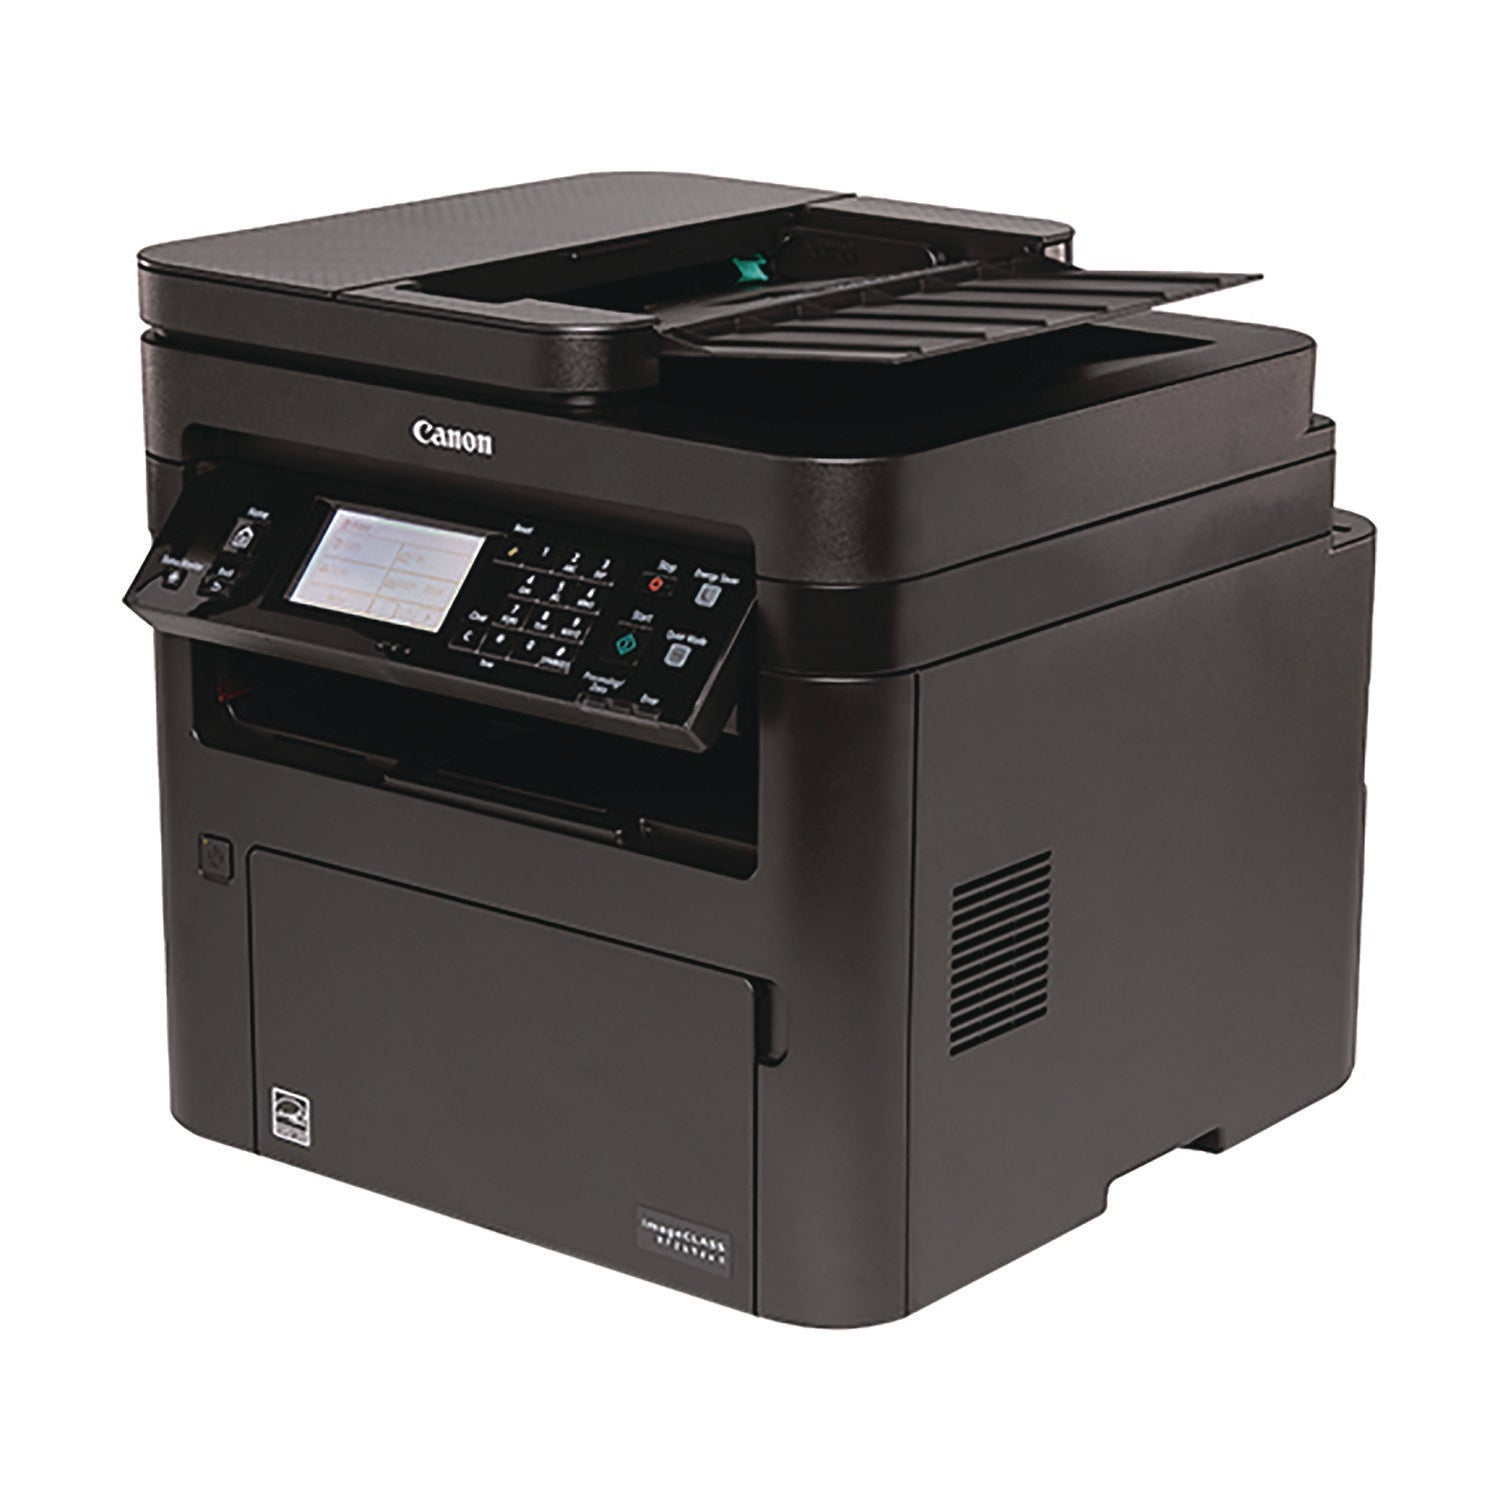 imageclass-mf269dw-ii-wireless-multifunction-laser-printer-copy-fax-print-scan_cnm5938c005 - 7